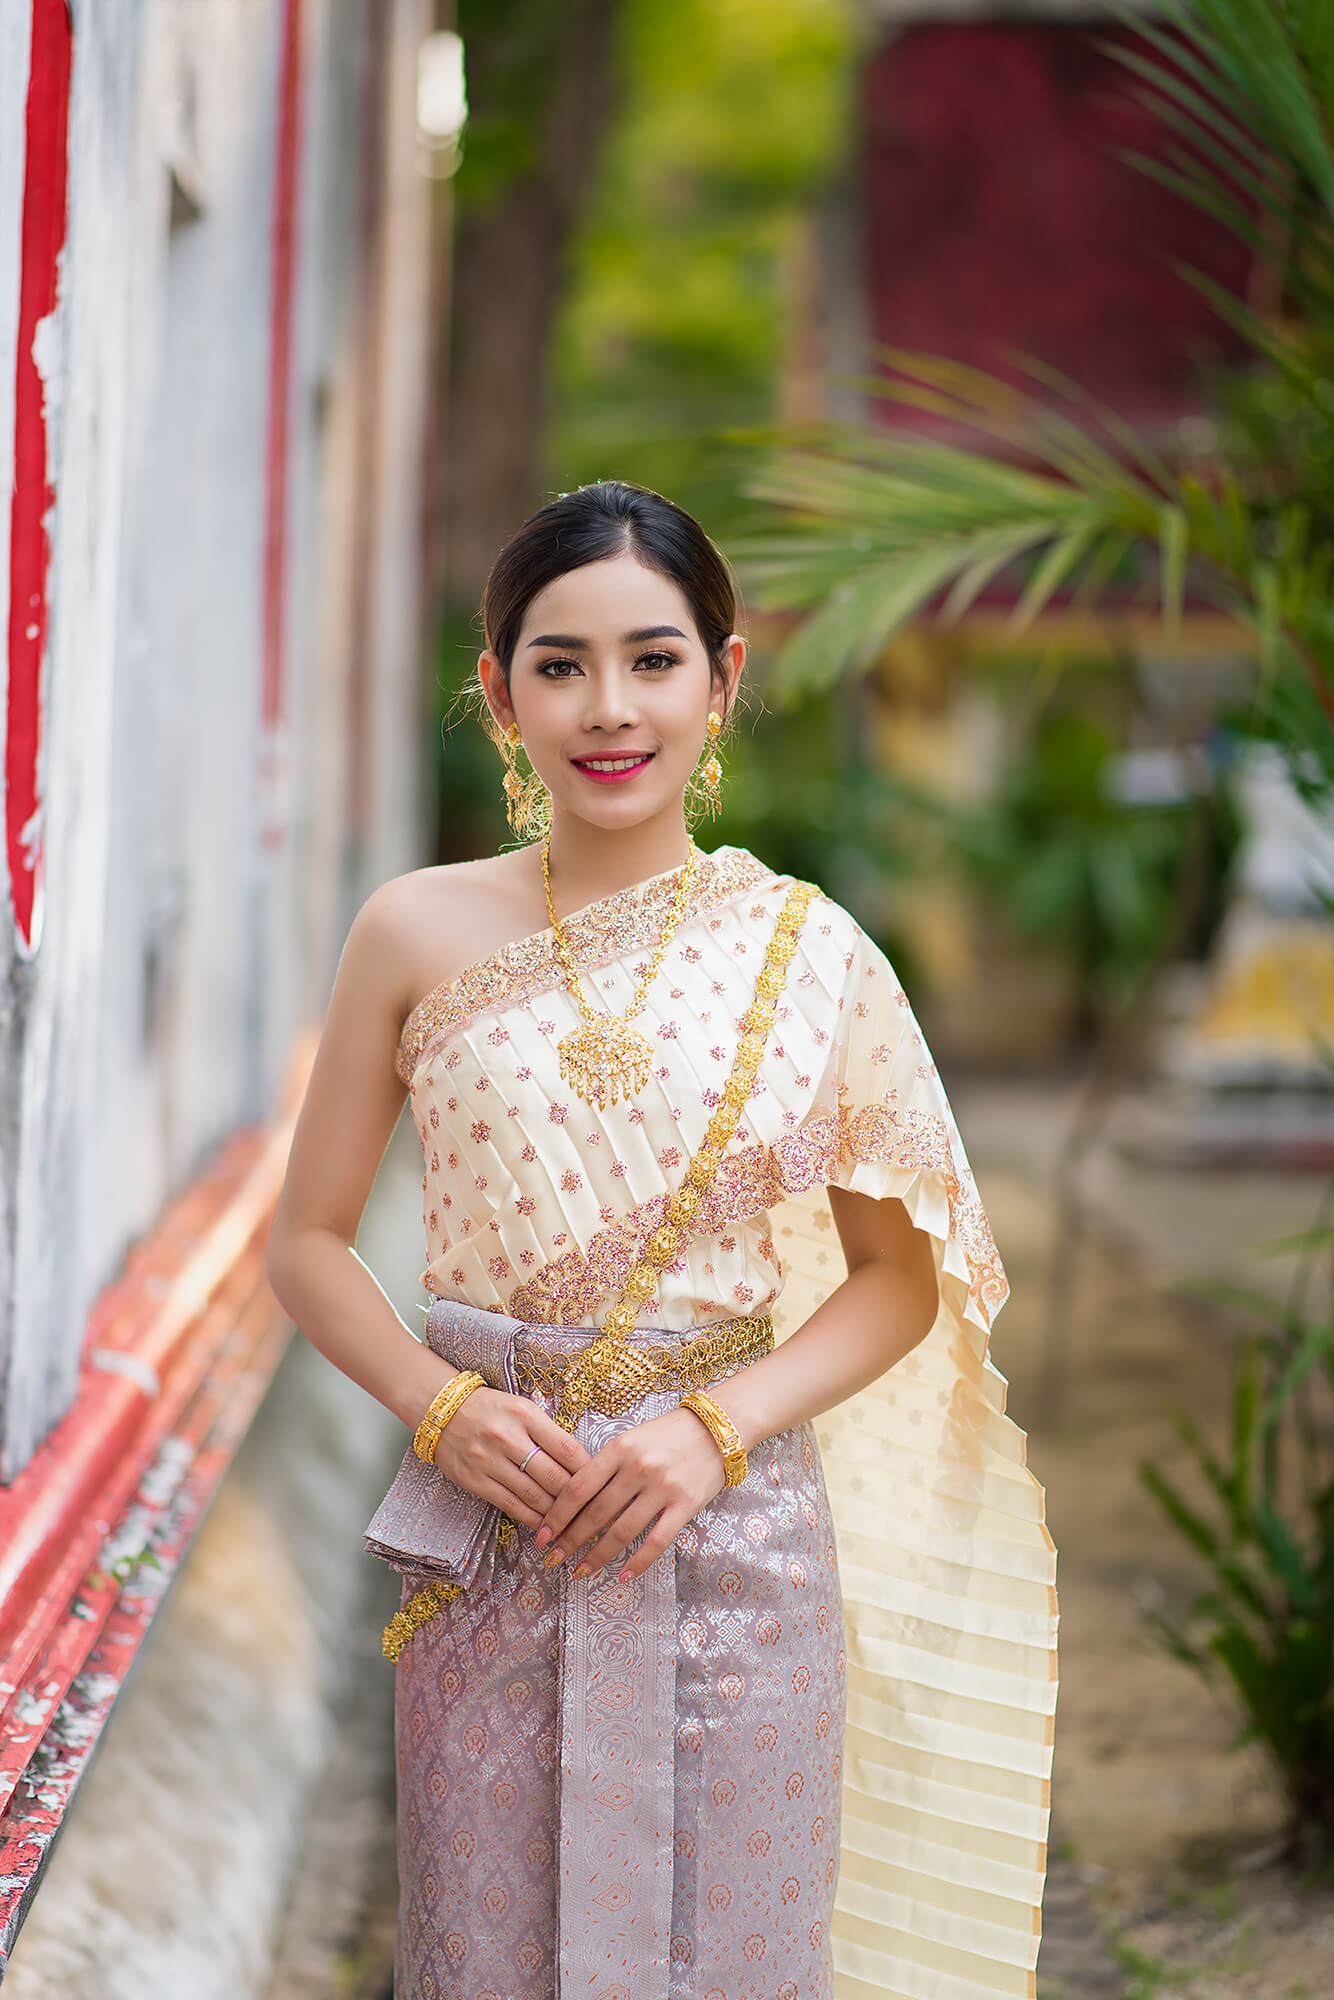 Phuket Traditional Thai Clothing with Photographer